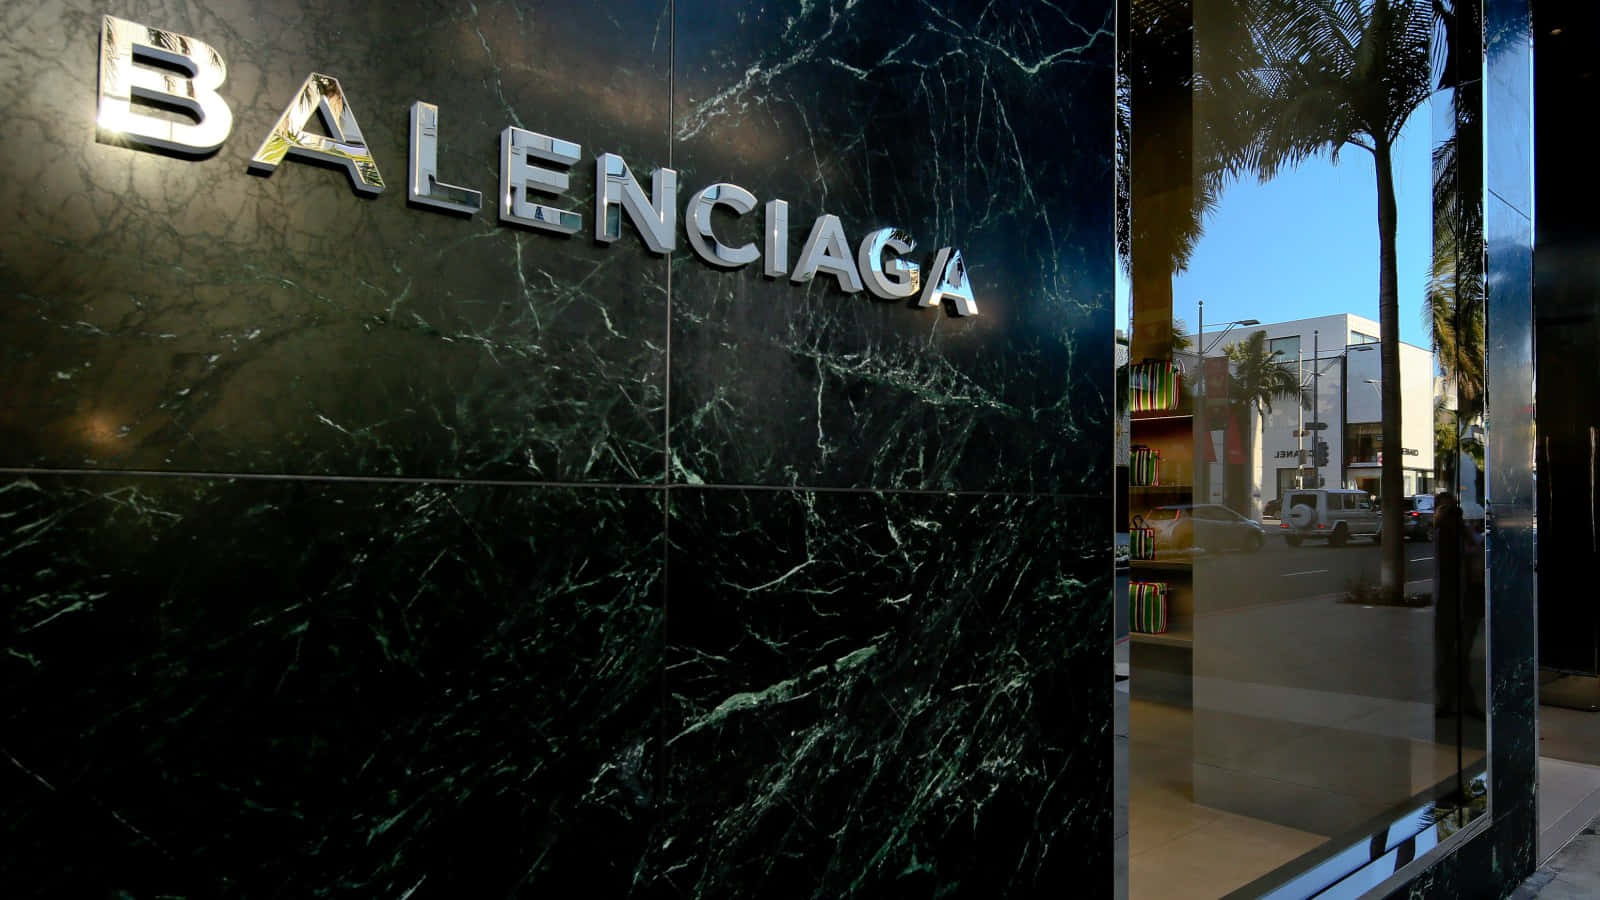 Make a style statement with Balenciaga